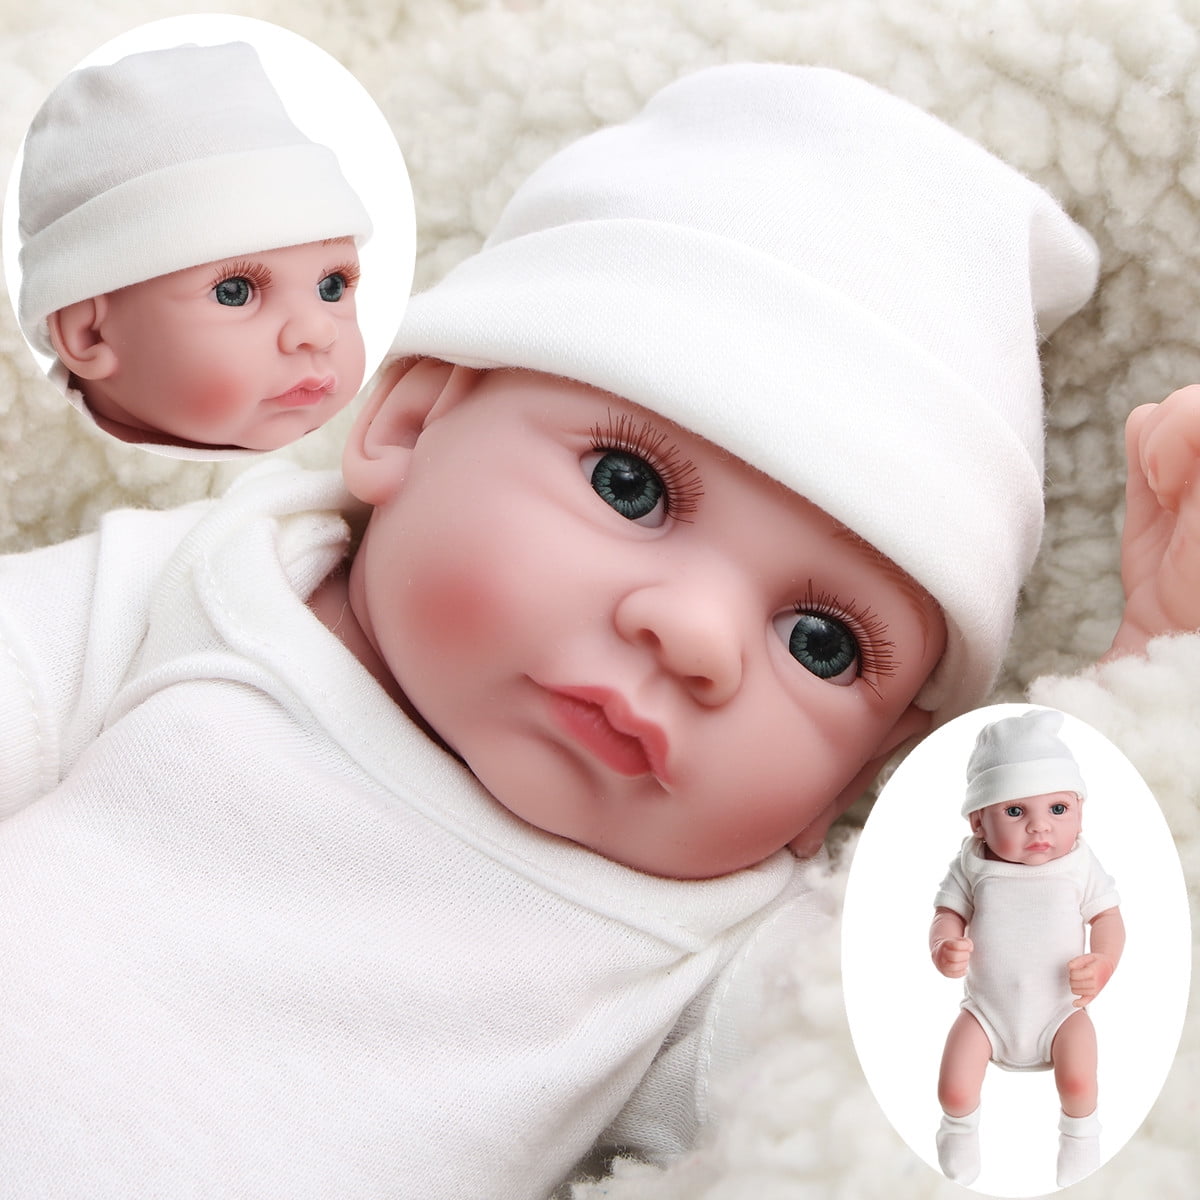 Baby Boy Doll Silicone Vinyl Reborn Toddler Dolls Real Handmade Lifelike Newborn 